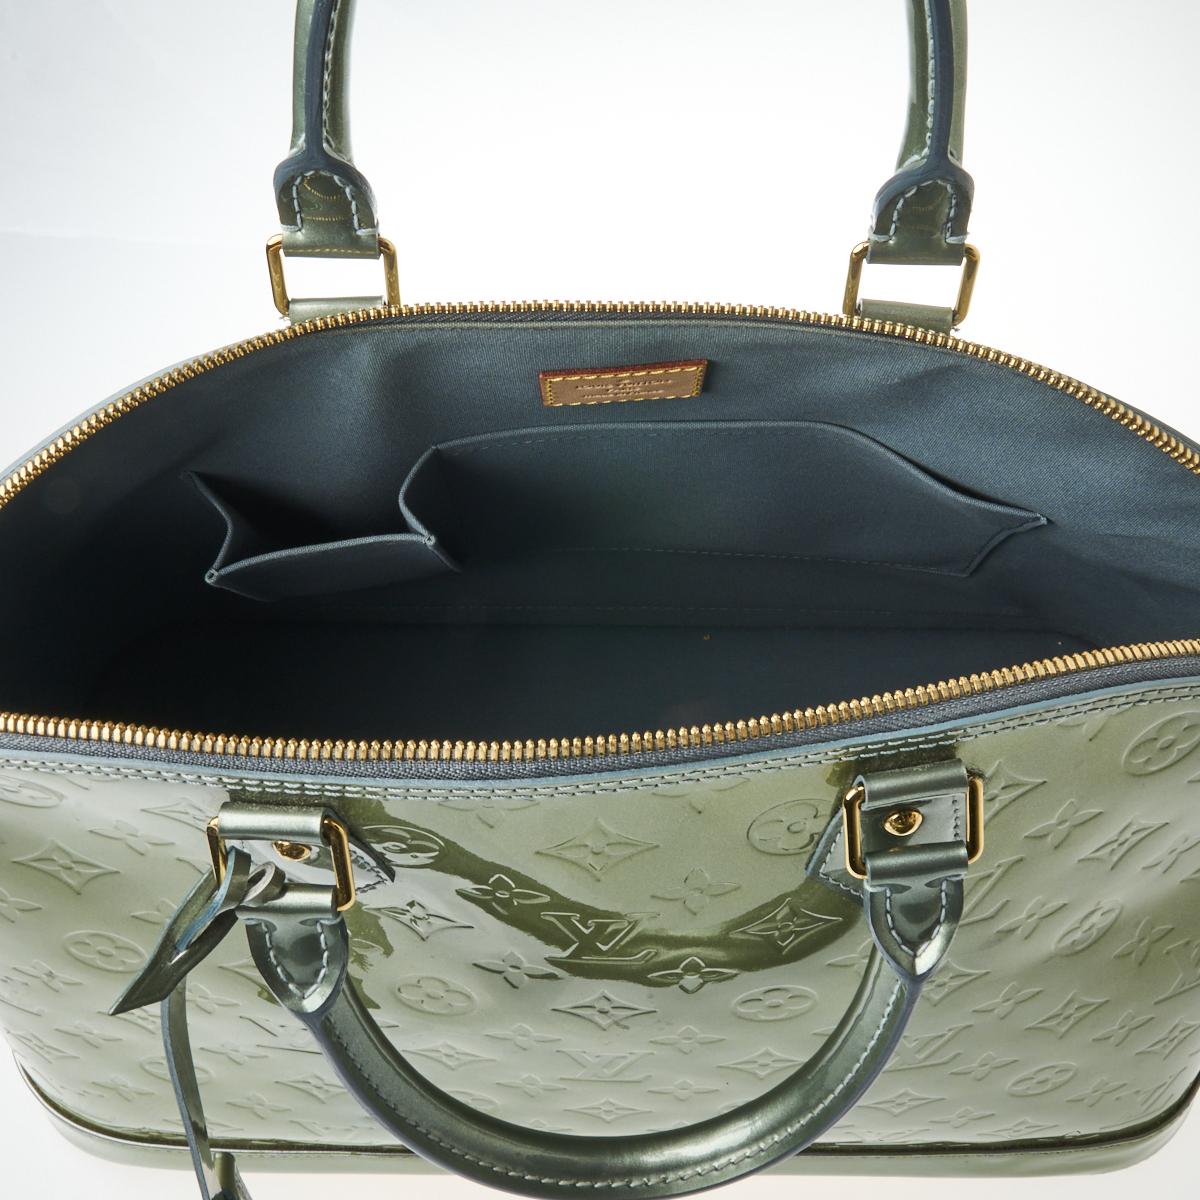 Sold at Auction: LOUIS VUITTON VERNIS HOUSTON LEATHER BAG; feature